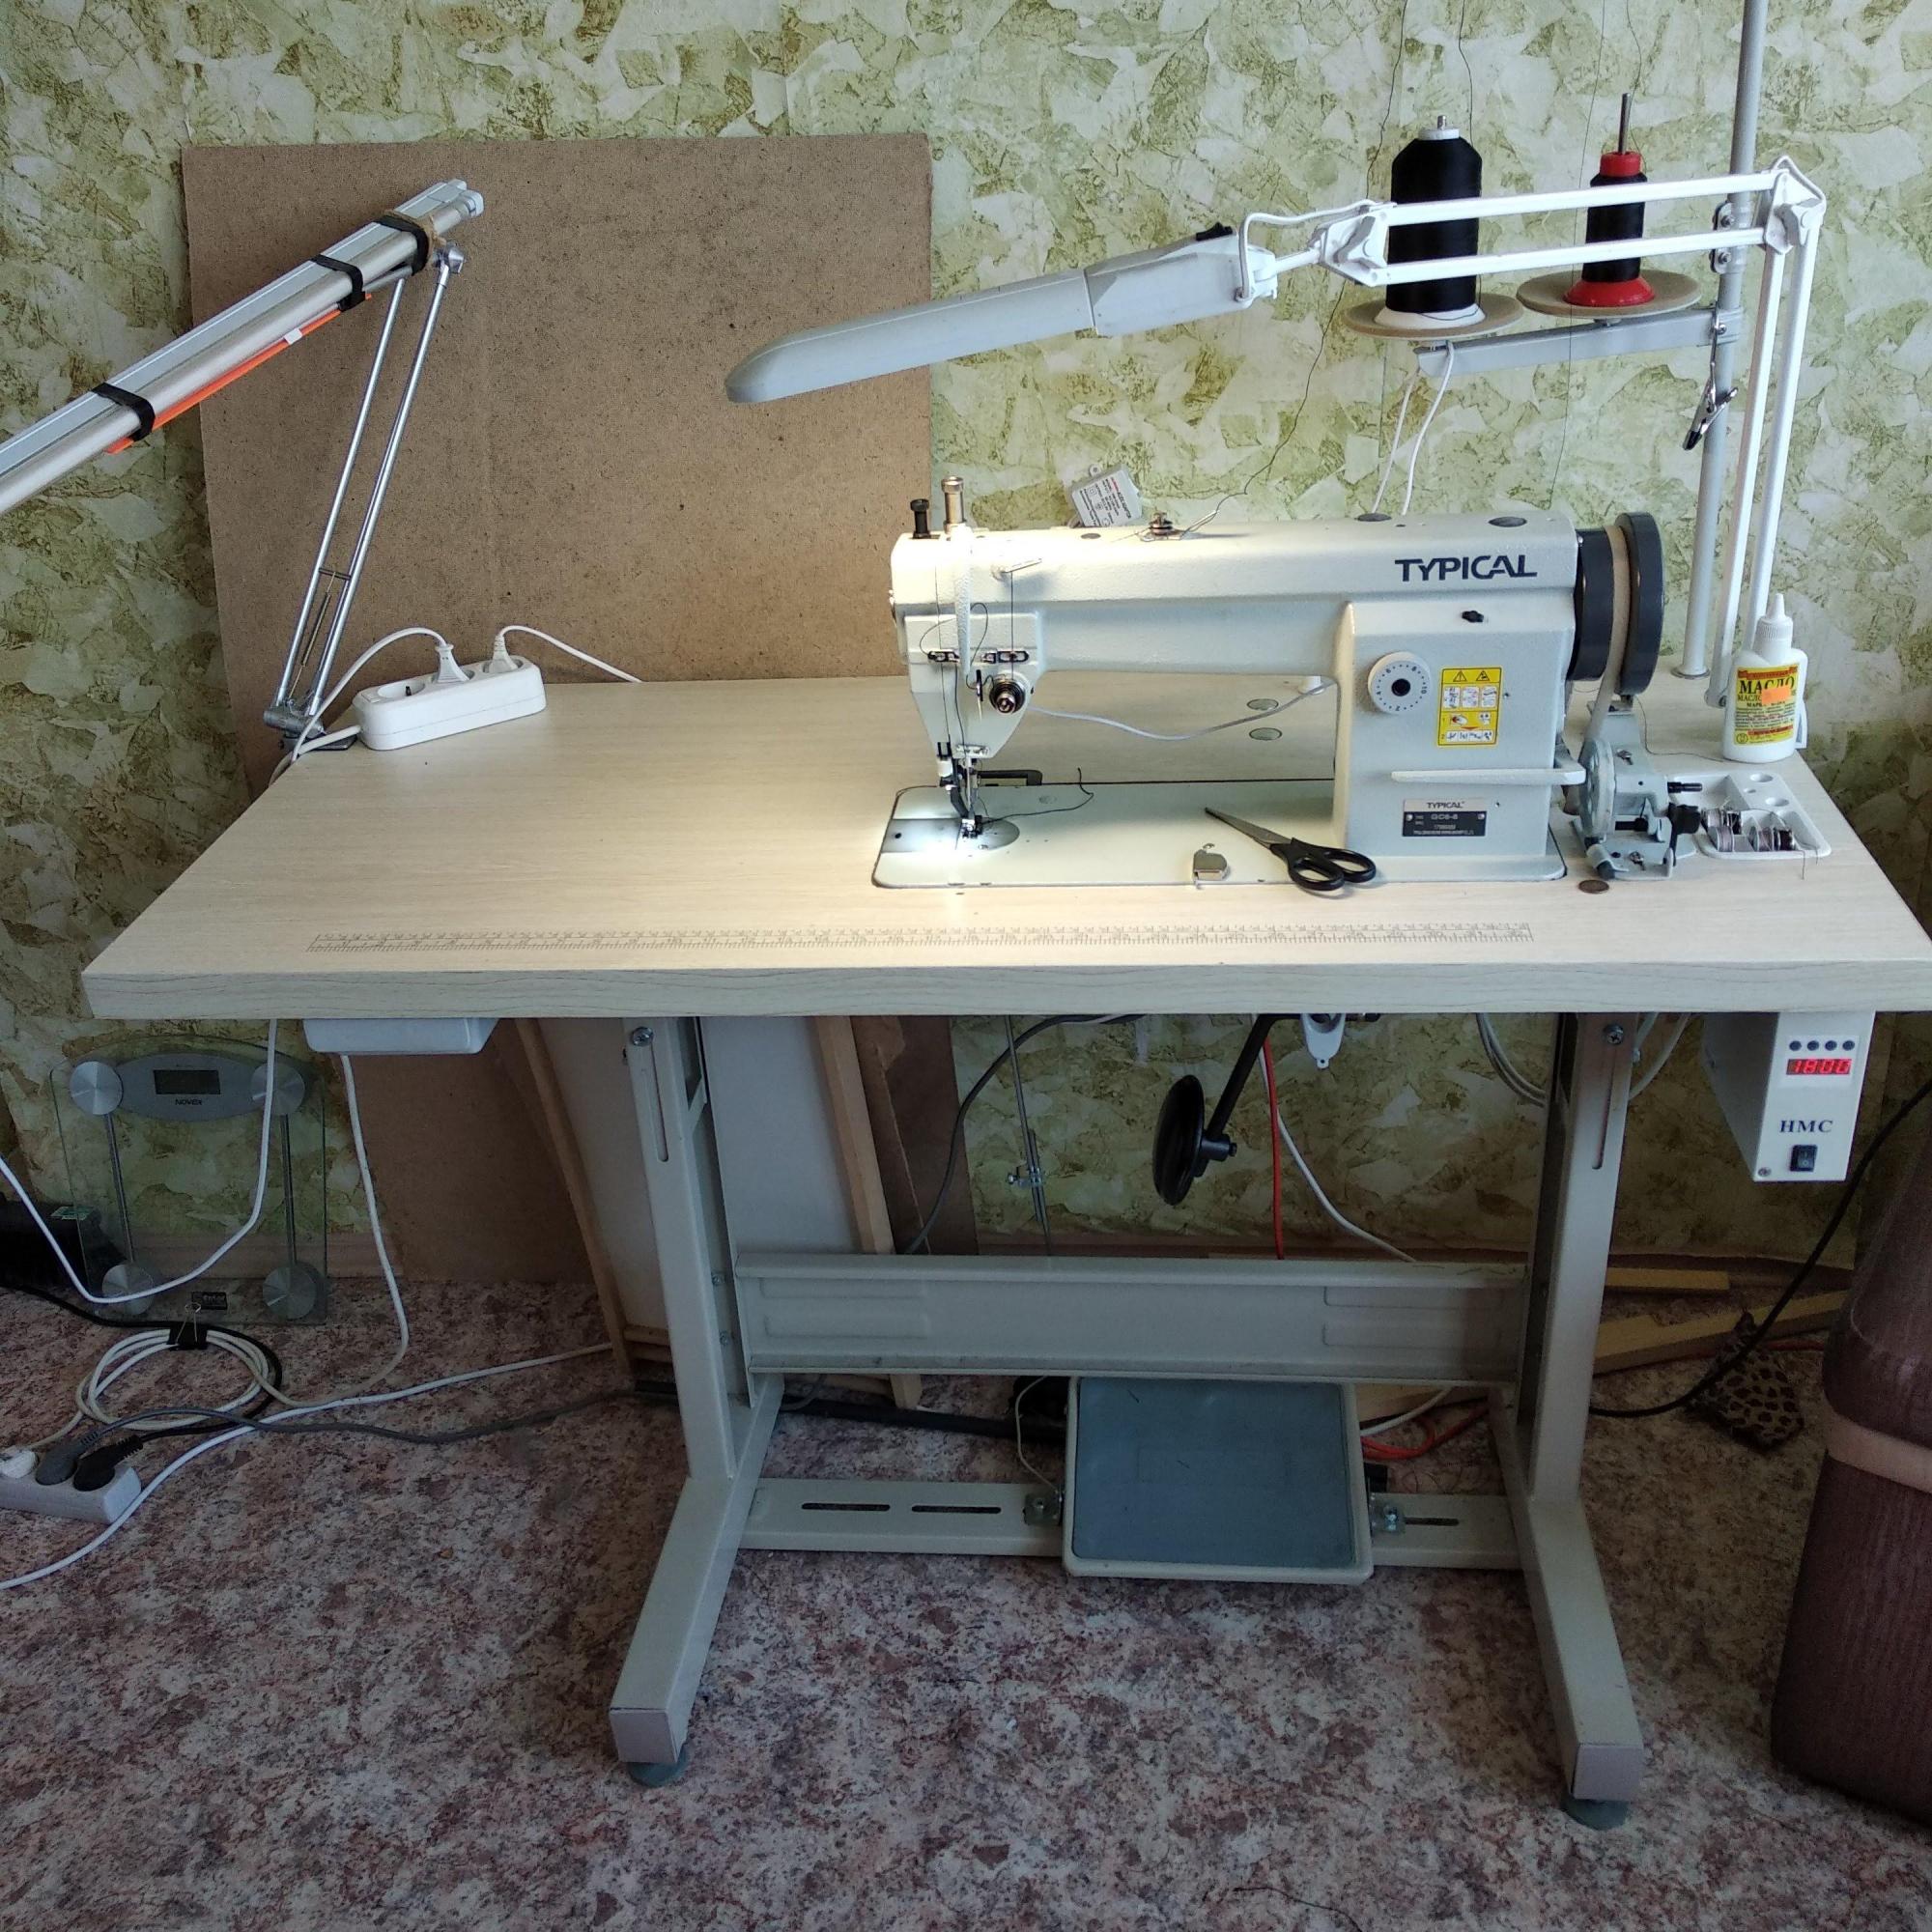 Typical швейная машина gc0303